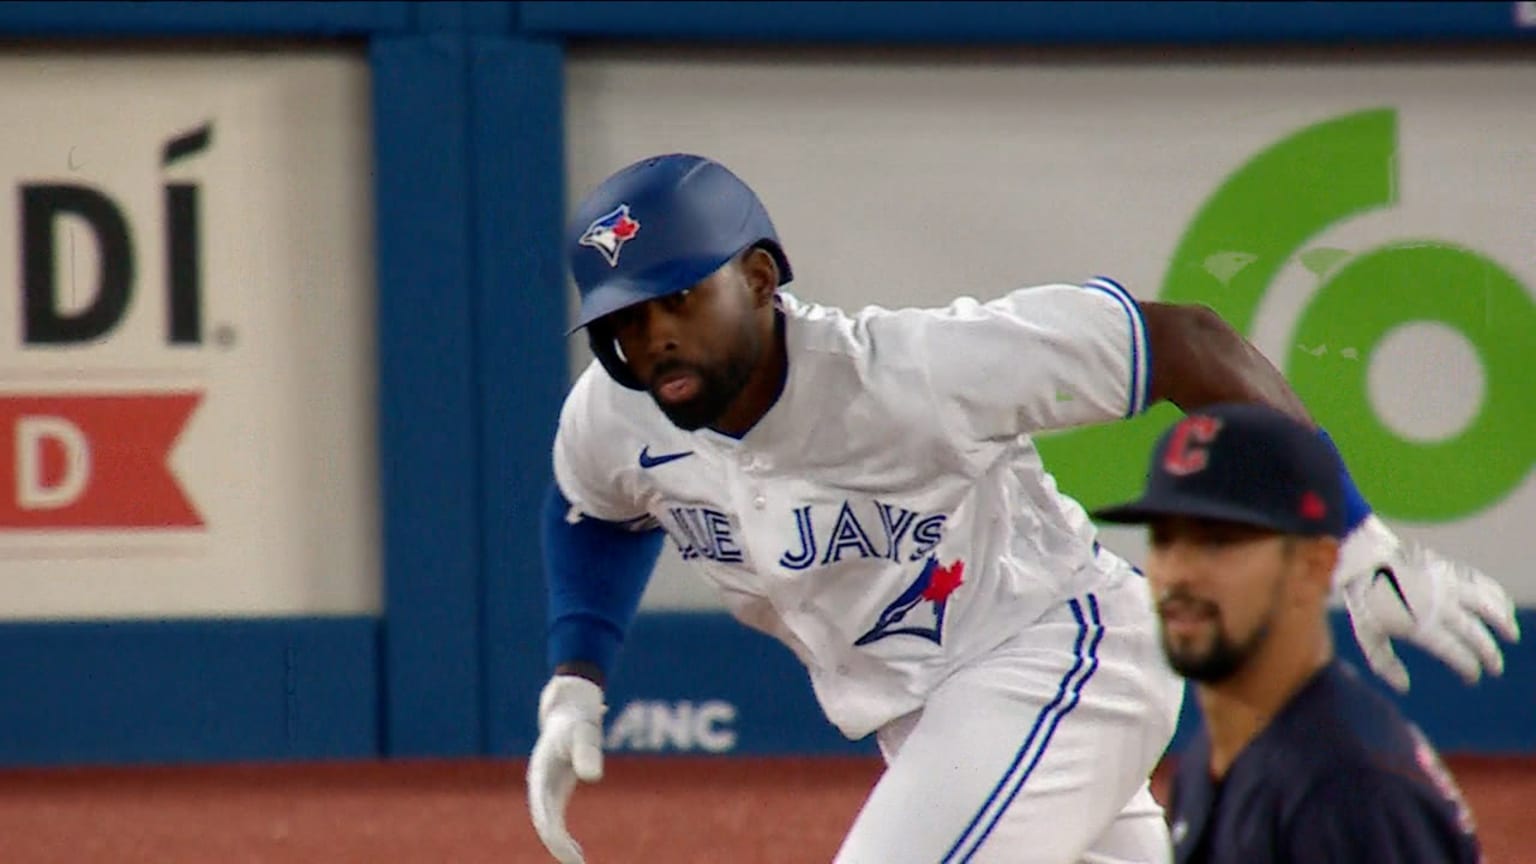 Toronto Blue Jays' Jackie Bradley Jr. runs on the field during a